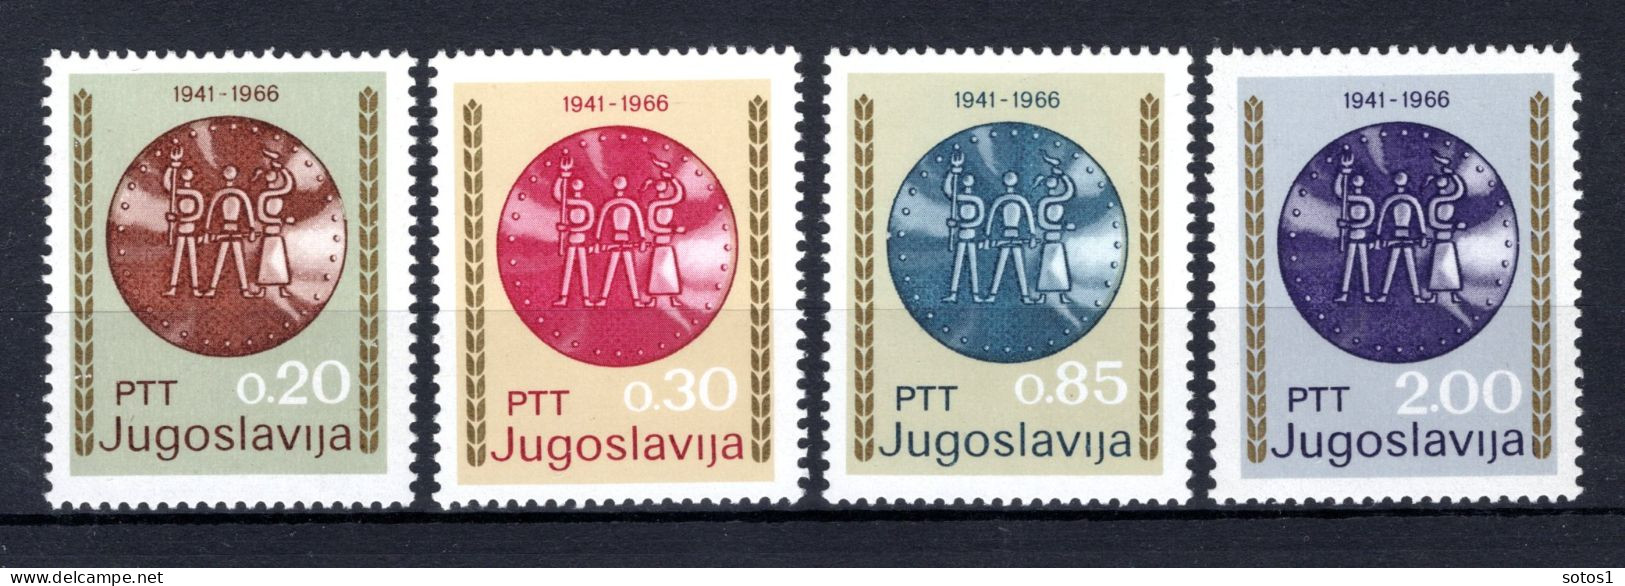 JOEGOSLAVIE Yt. 1062/1065 MNH 1966 - Unused Stamps